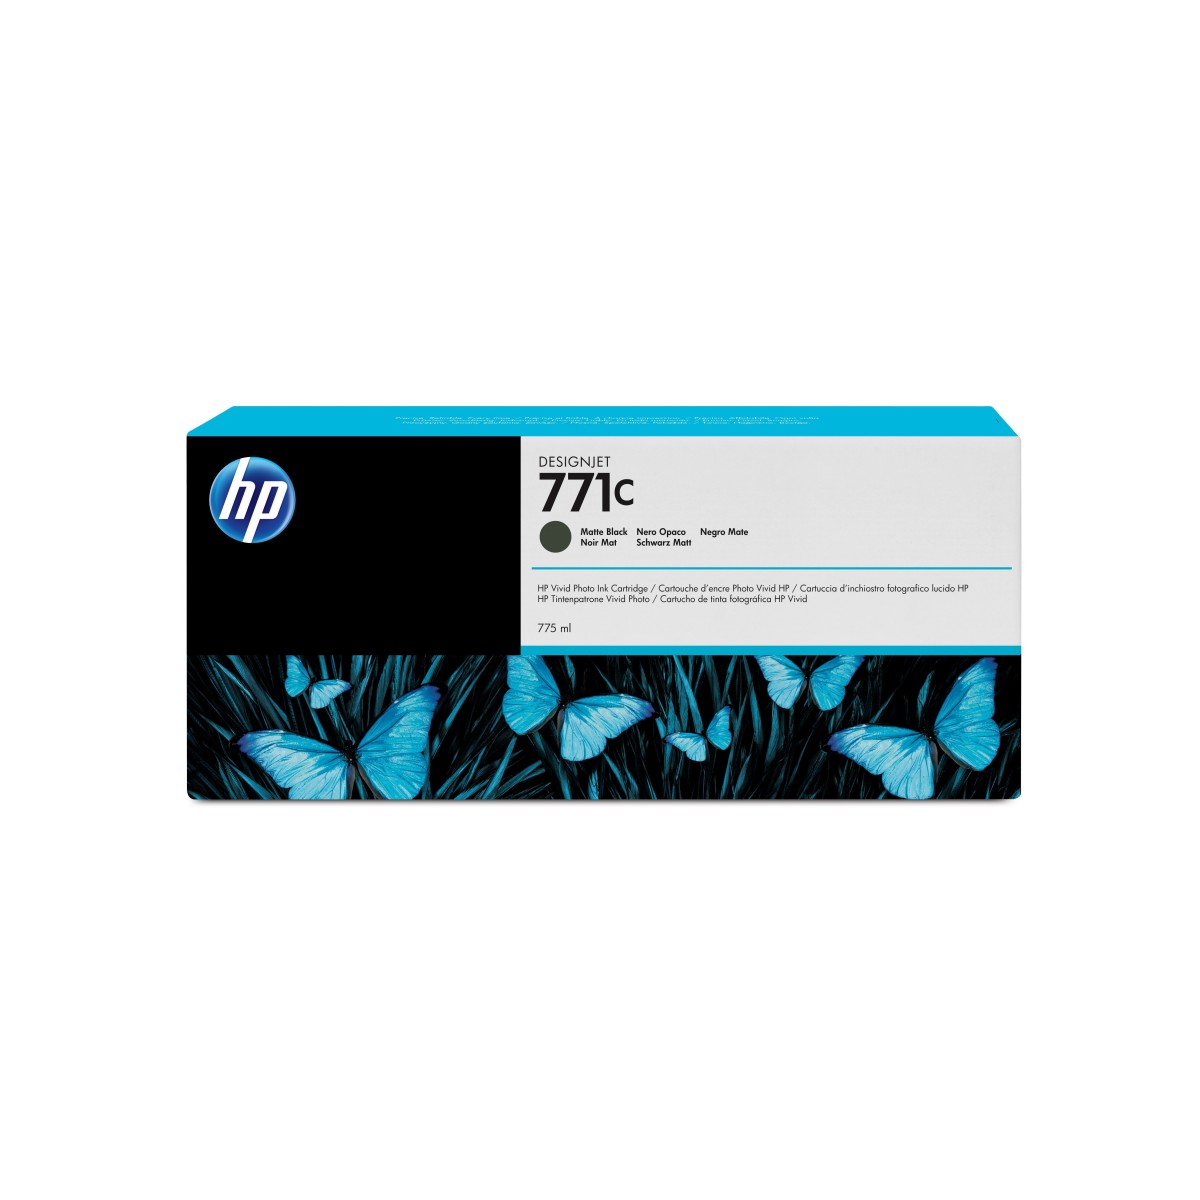 HP DesignJet 771C - Ink Cartridge Original - Black - 775 ml